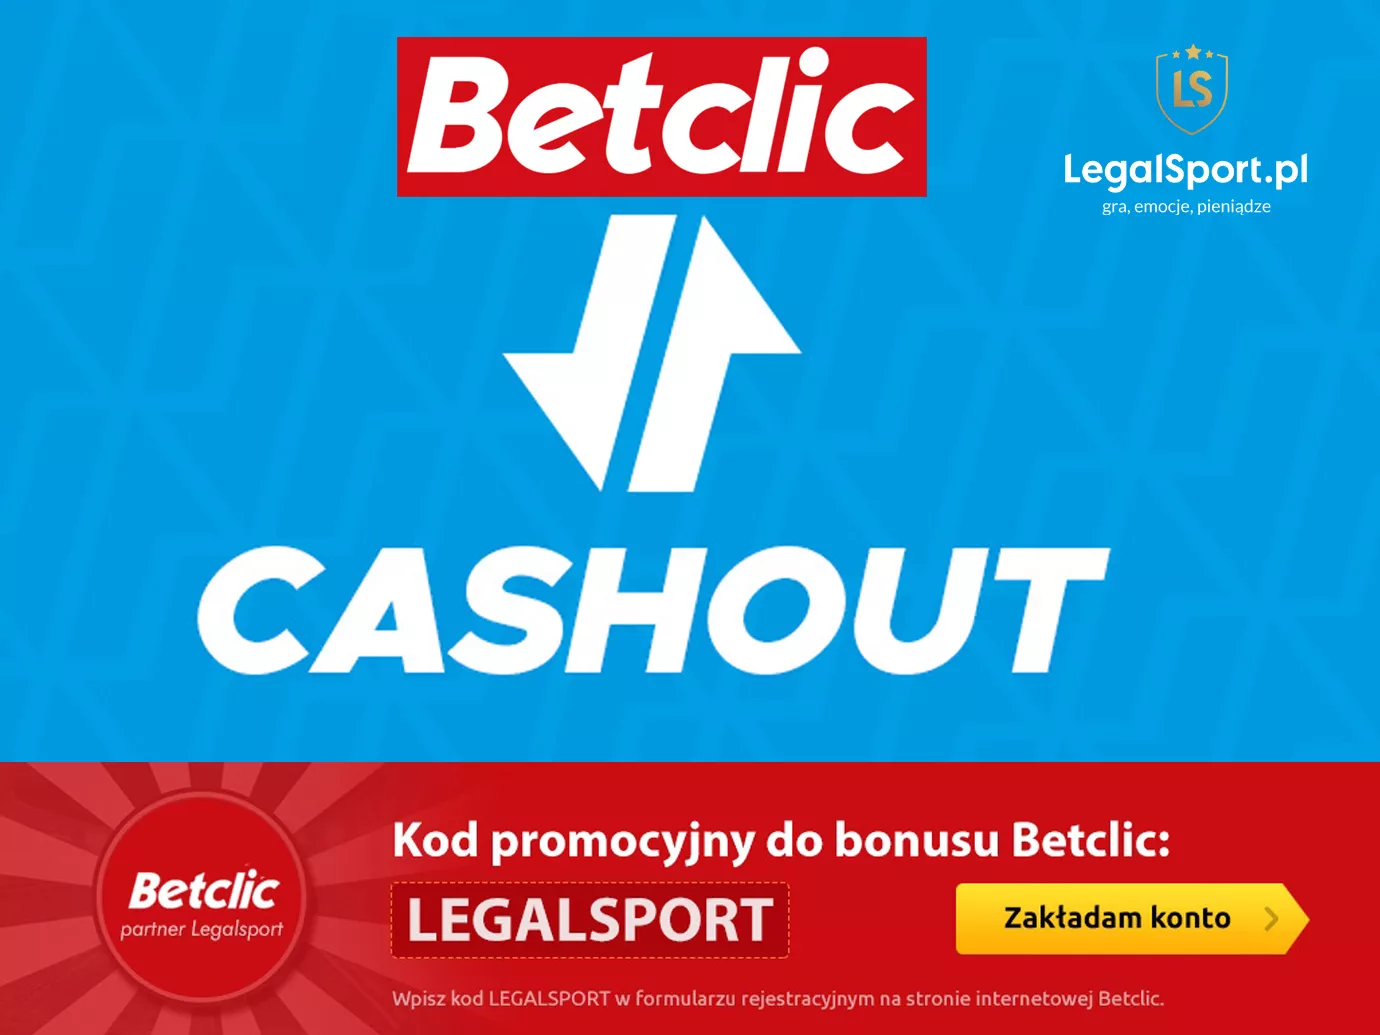 Betclic Cashout